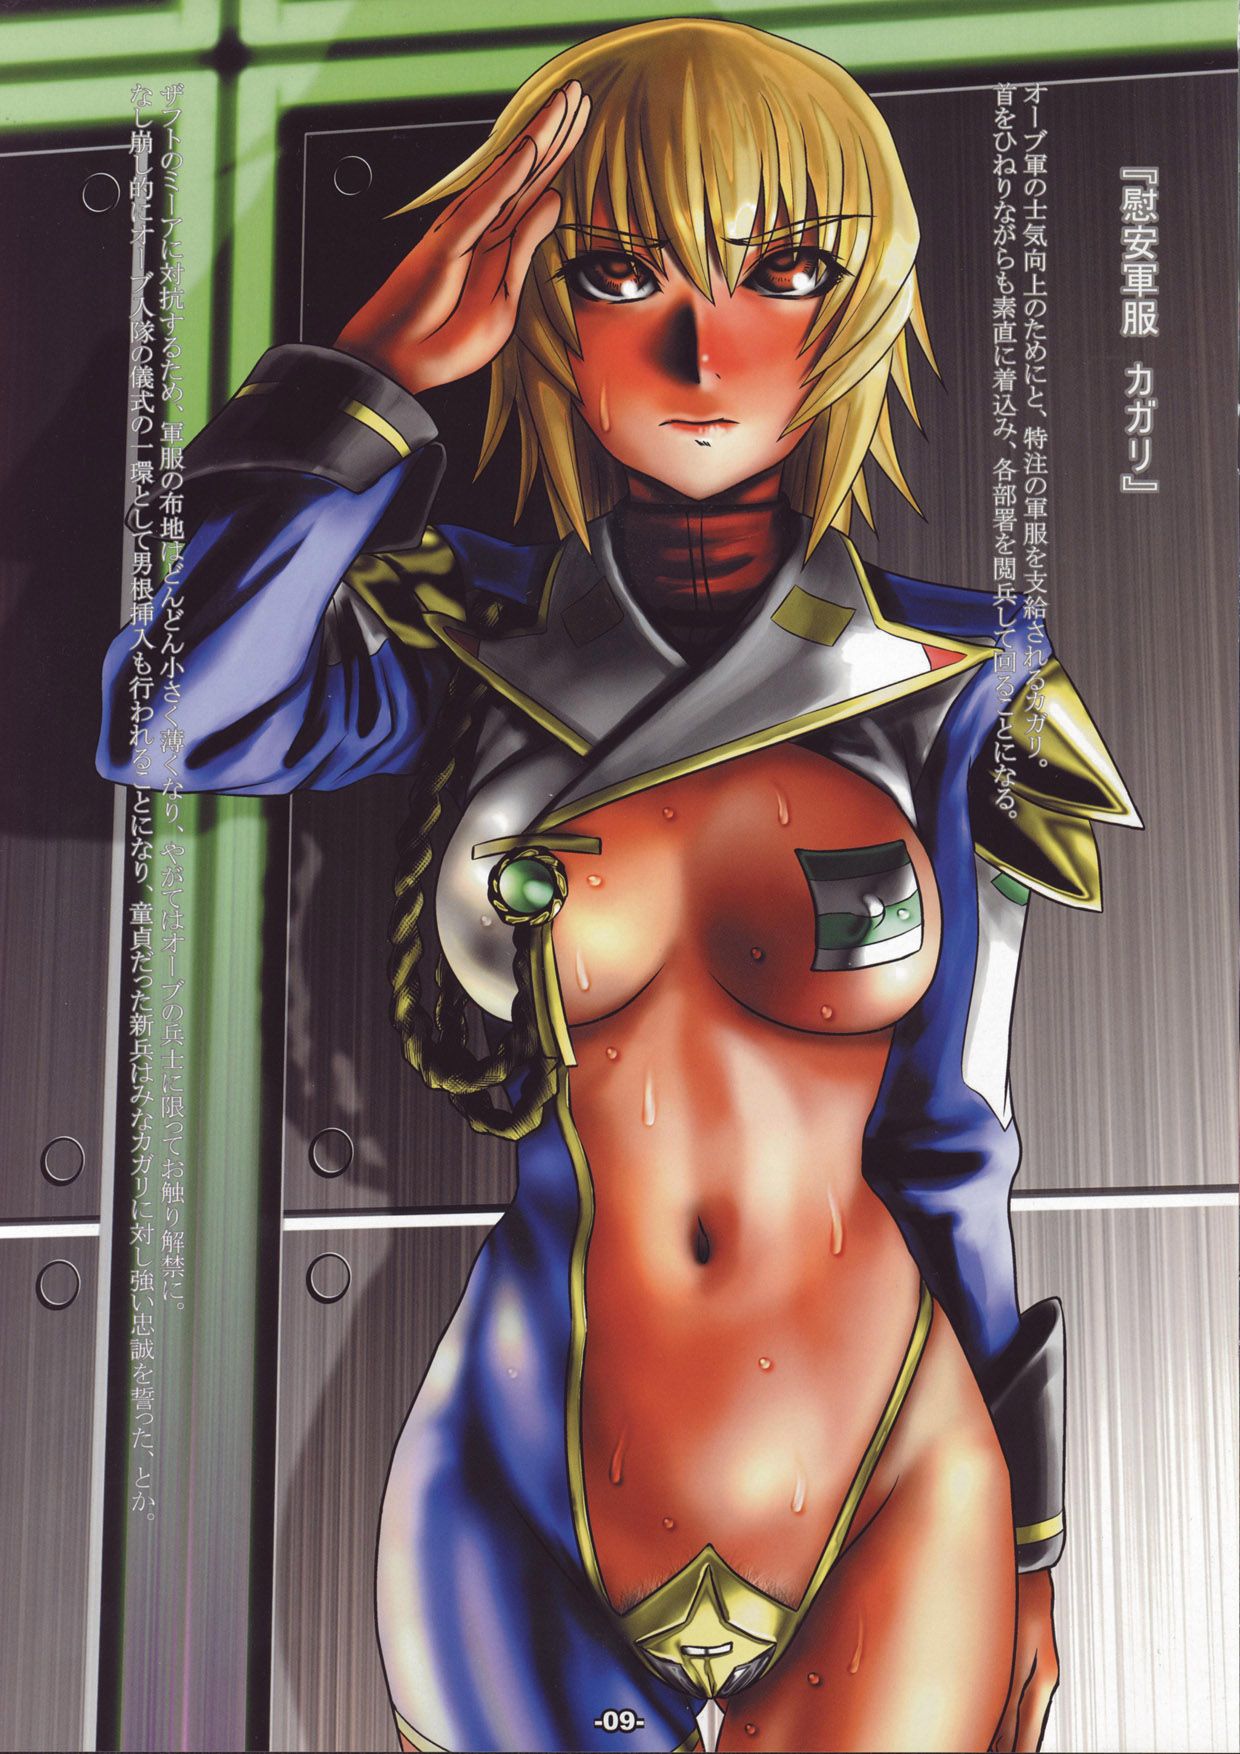 Isn't the female uniform of Gundam too erotic? Designed hentai upper layer wwwwww 5